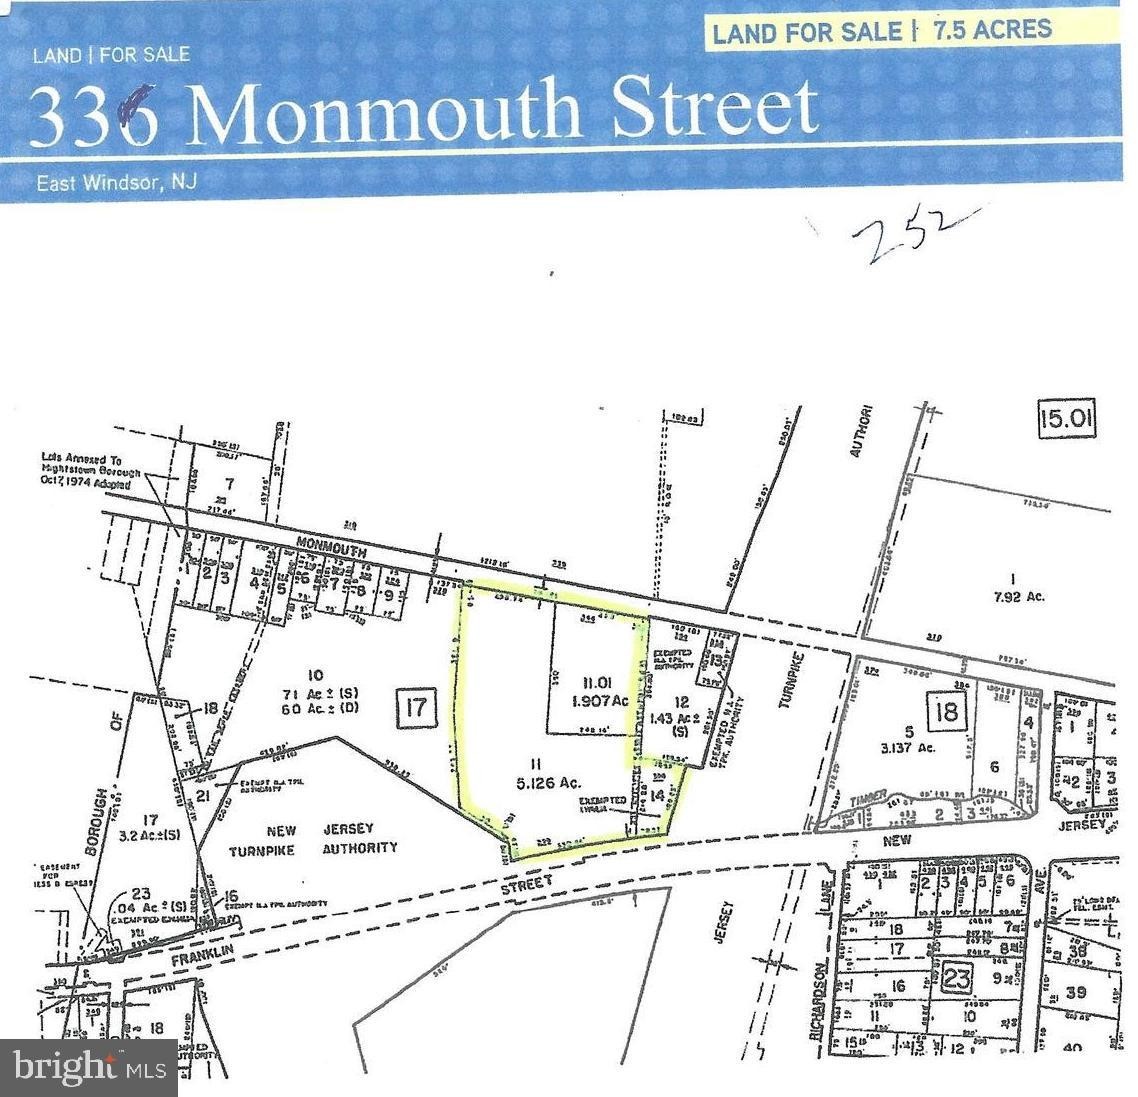 1. 336 Monmouth Street